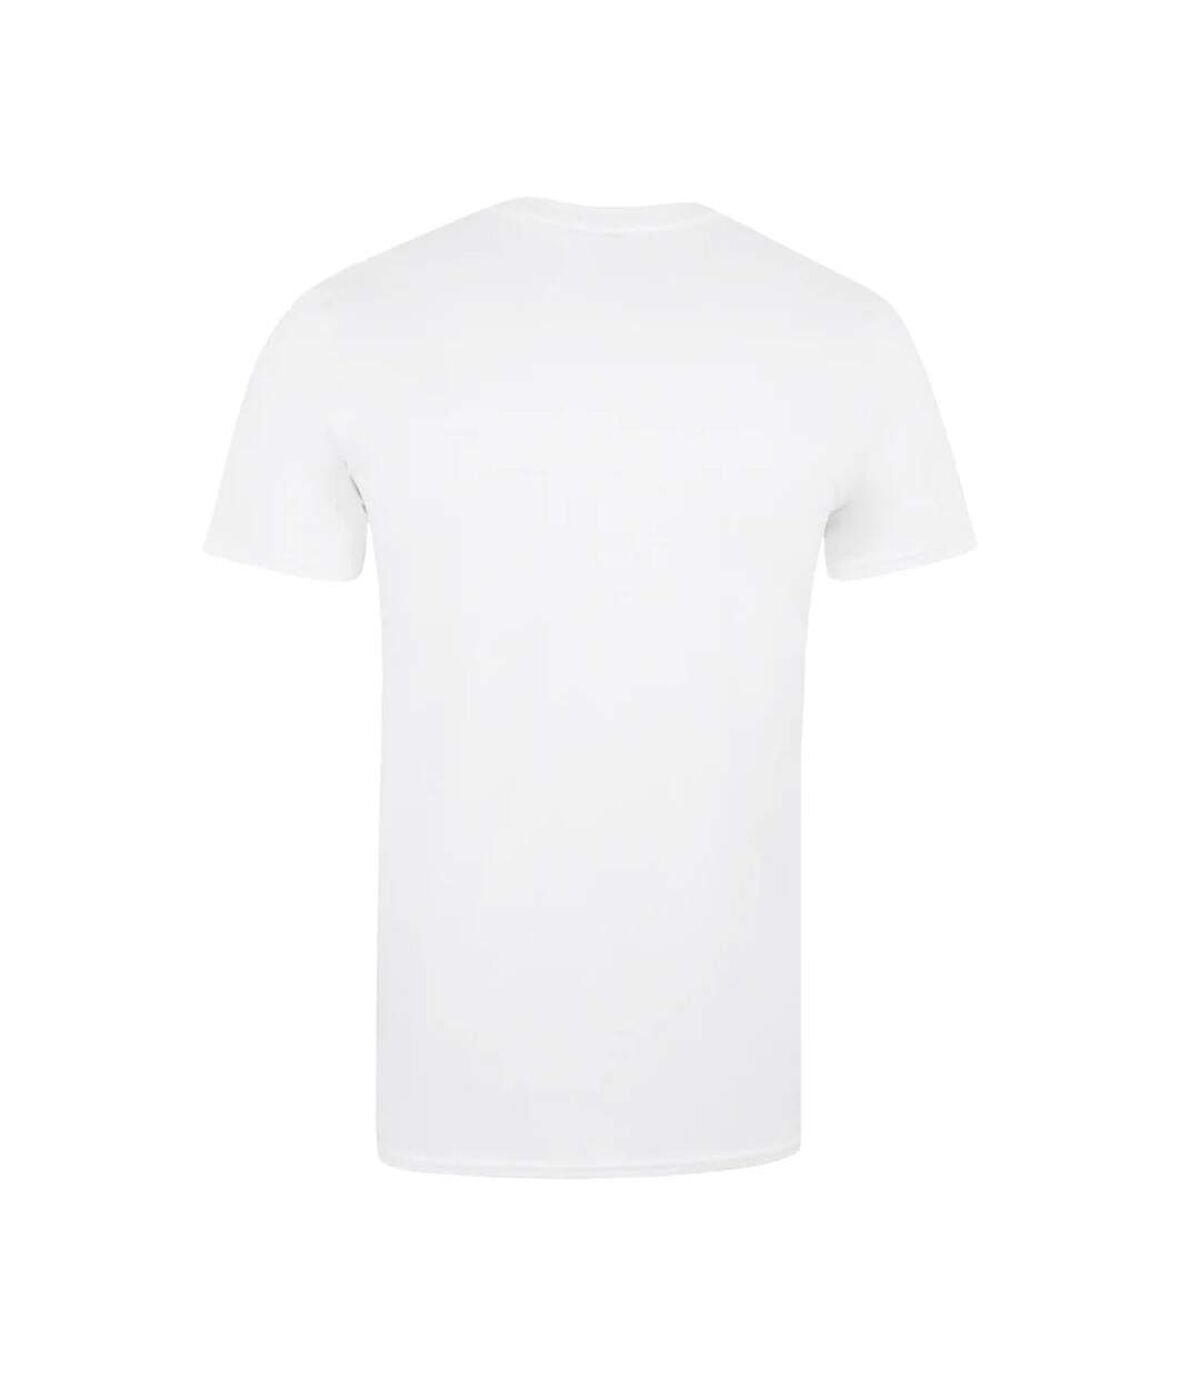 AC/DC Mens We Salute You Cotton T-Shirt (Blanc) - UTTV345